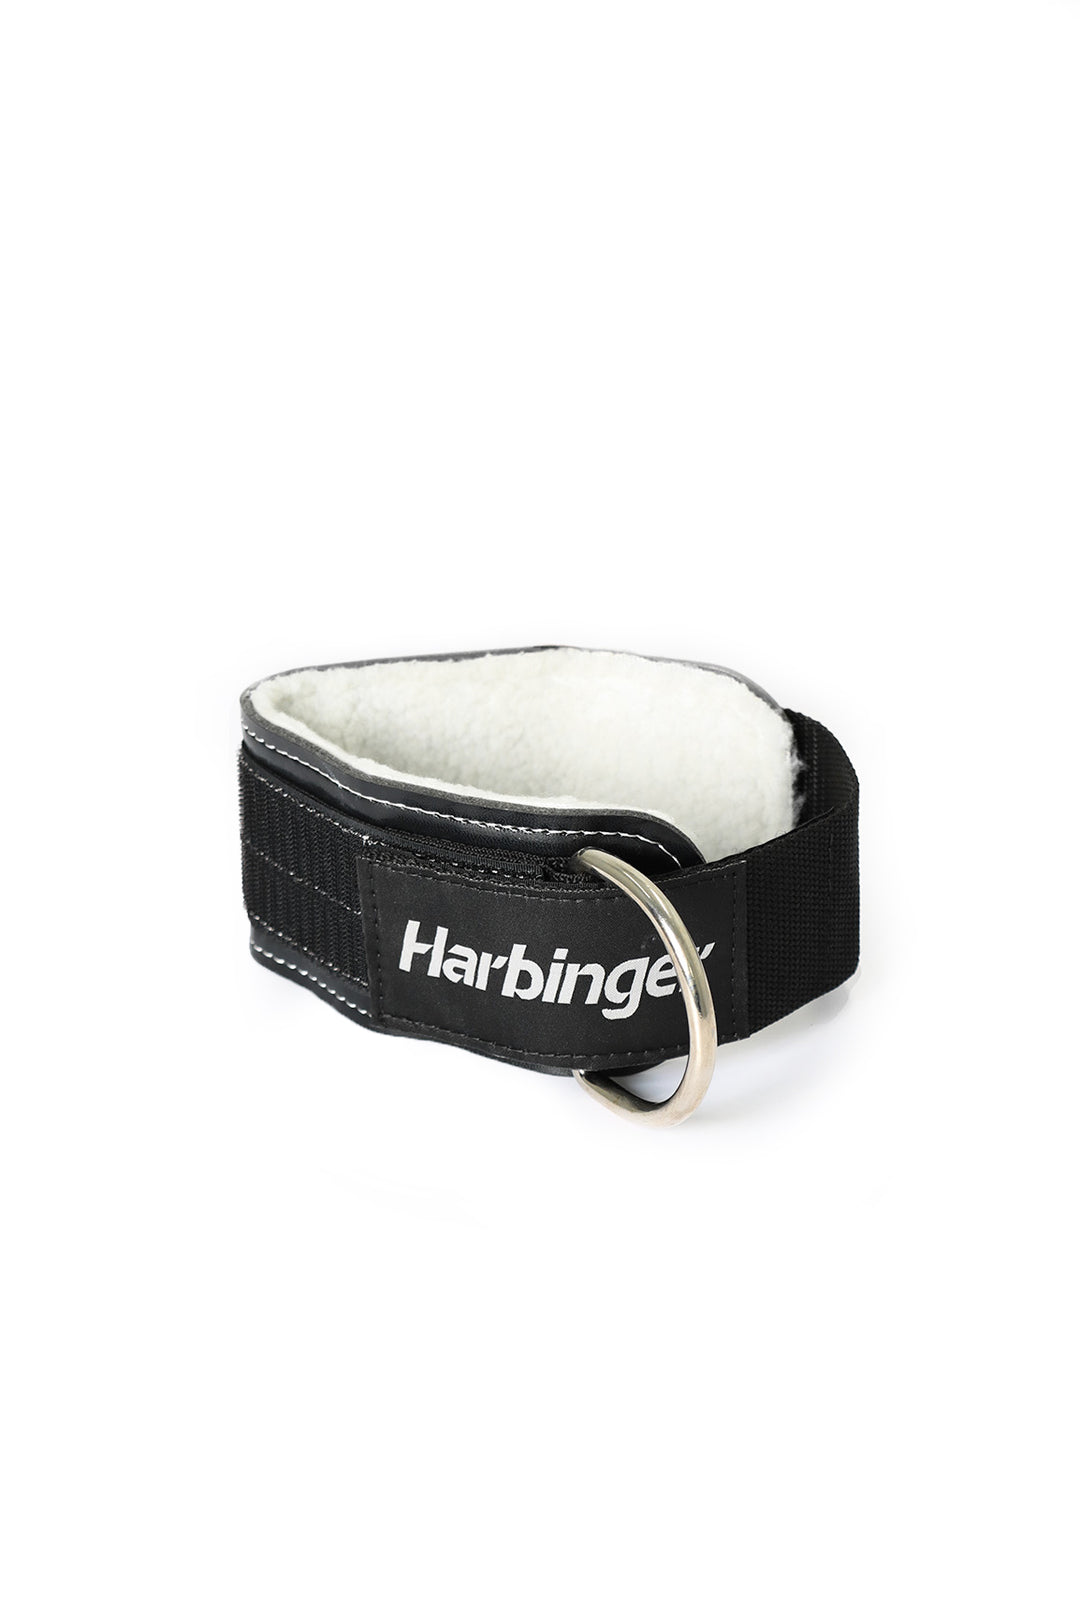 Harbinger Heavy Duty 3 Inch Ankle Cuff Attachment